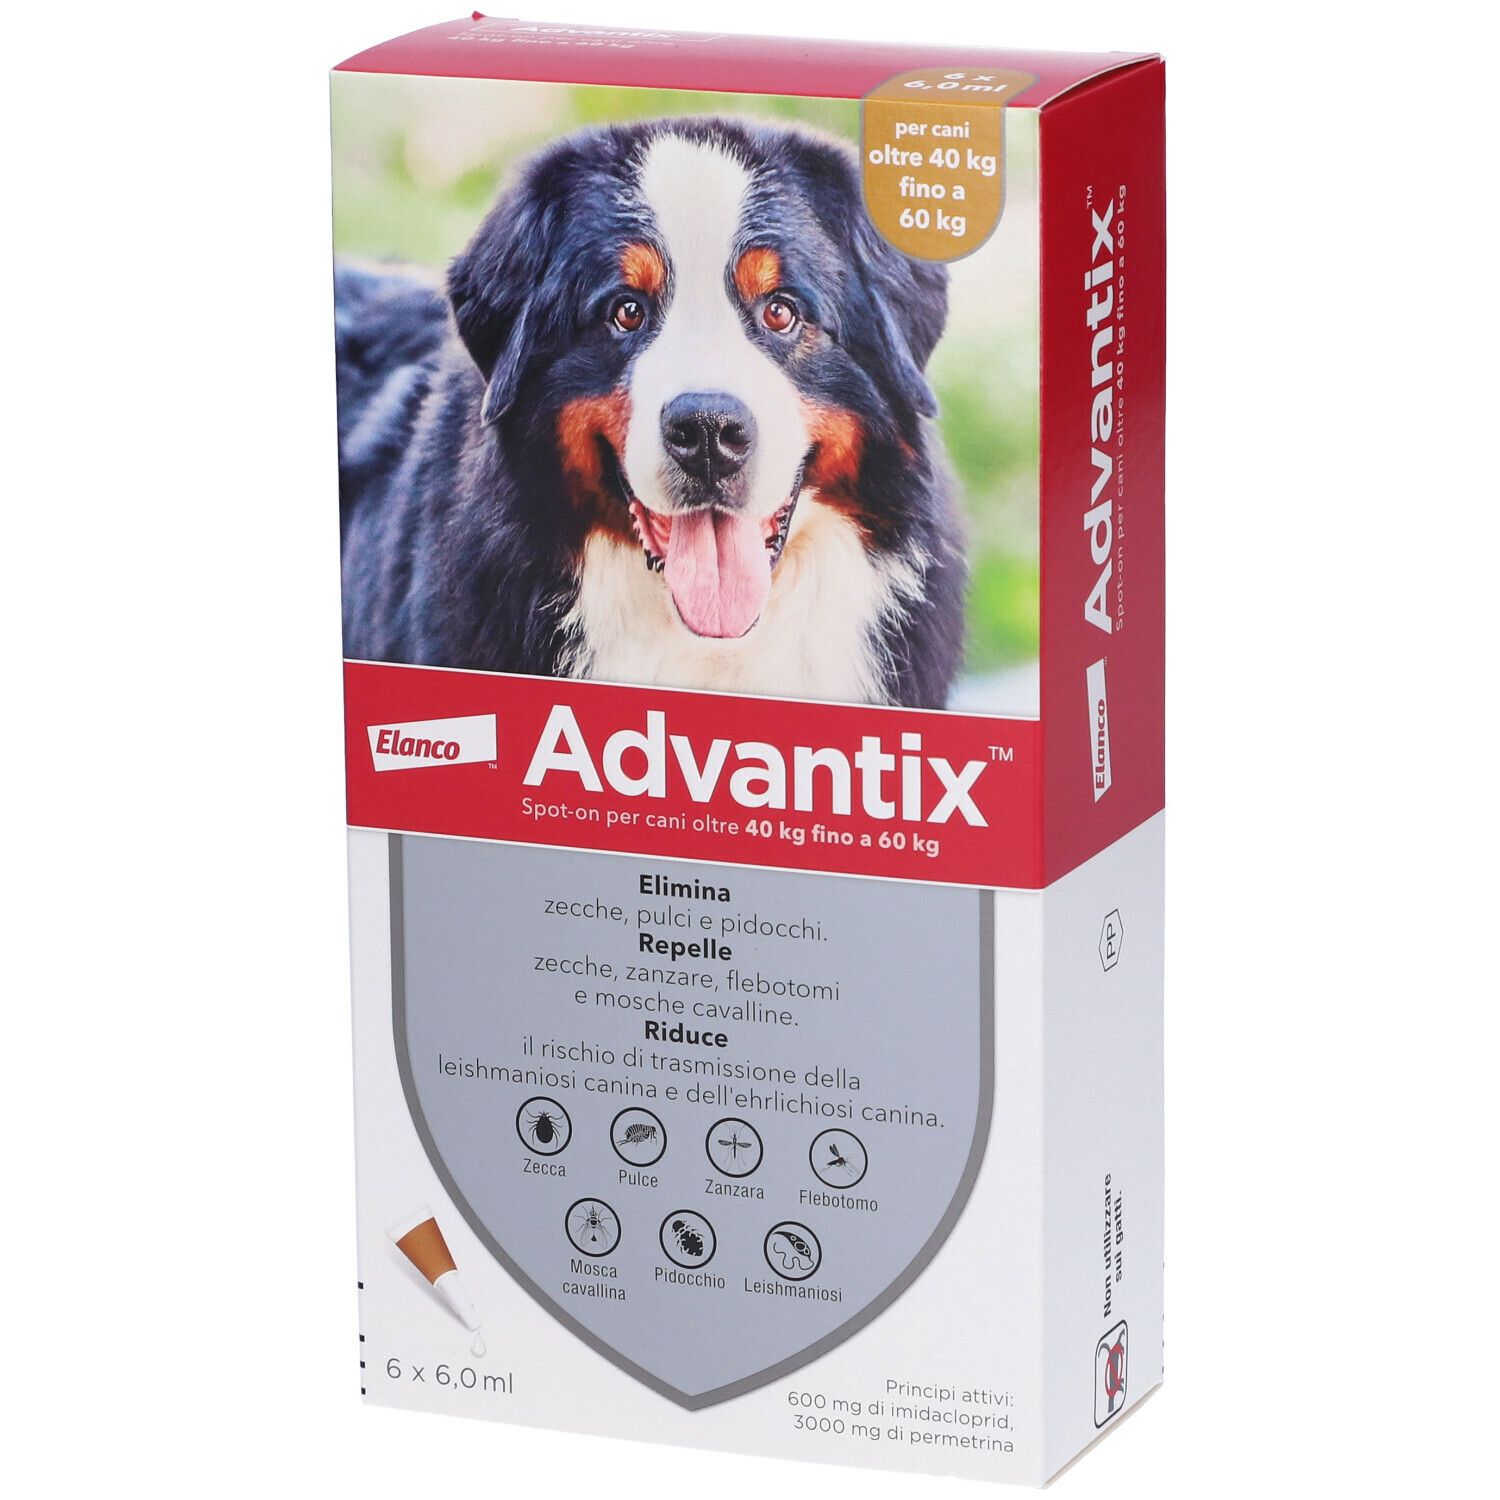 advantix spot-on per cani oltre 40 kg fino a 60 kg